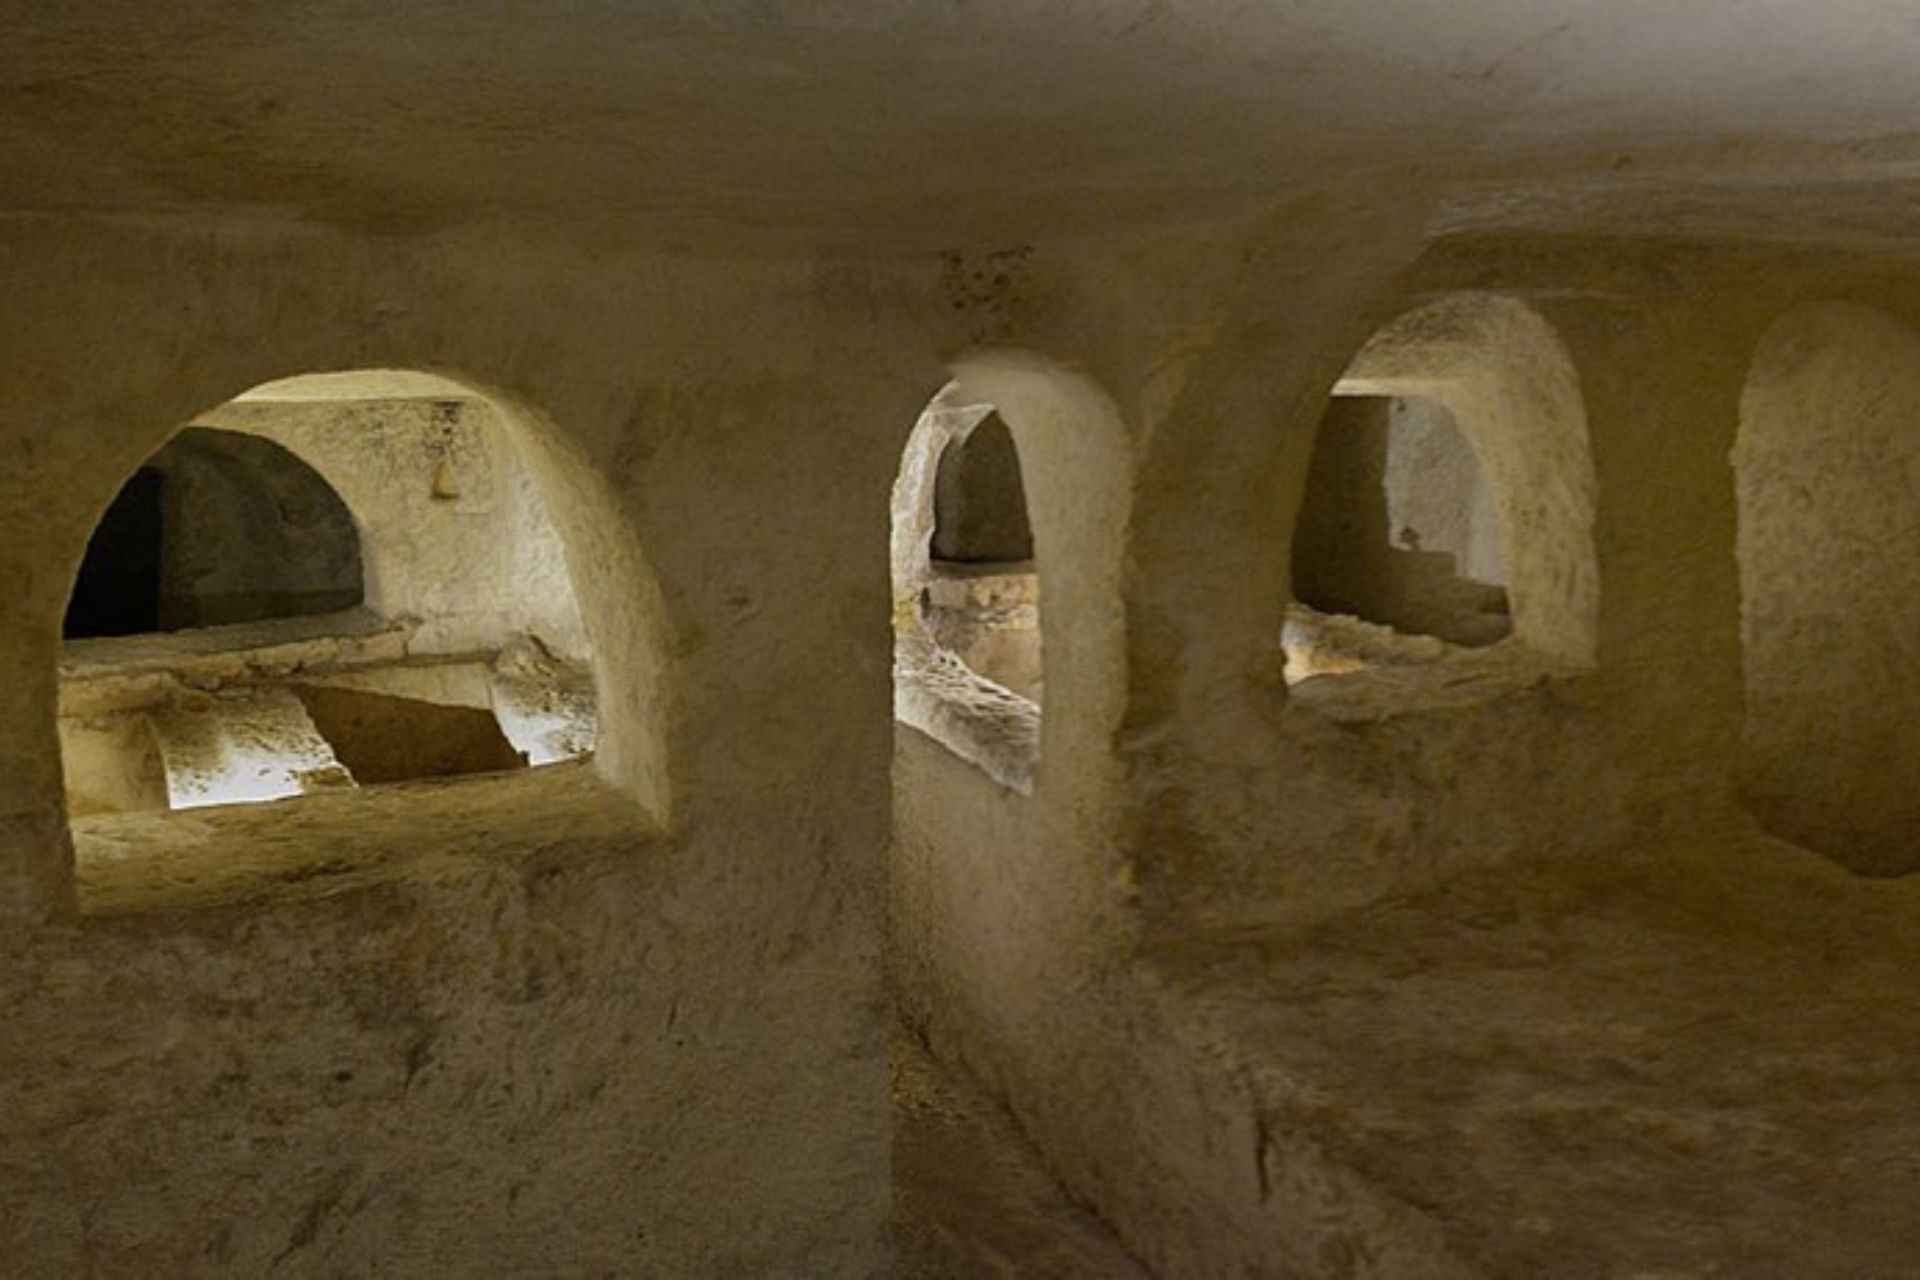 Inside St Paul's Catacombs